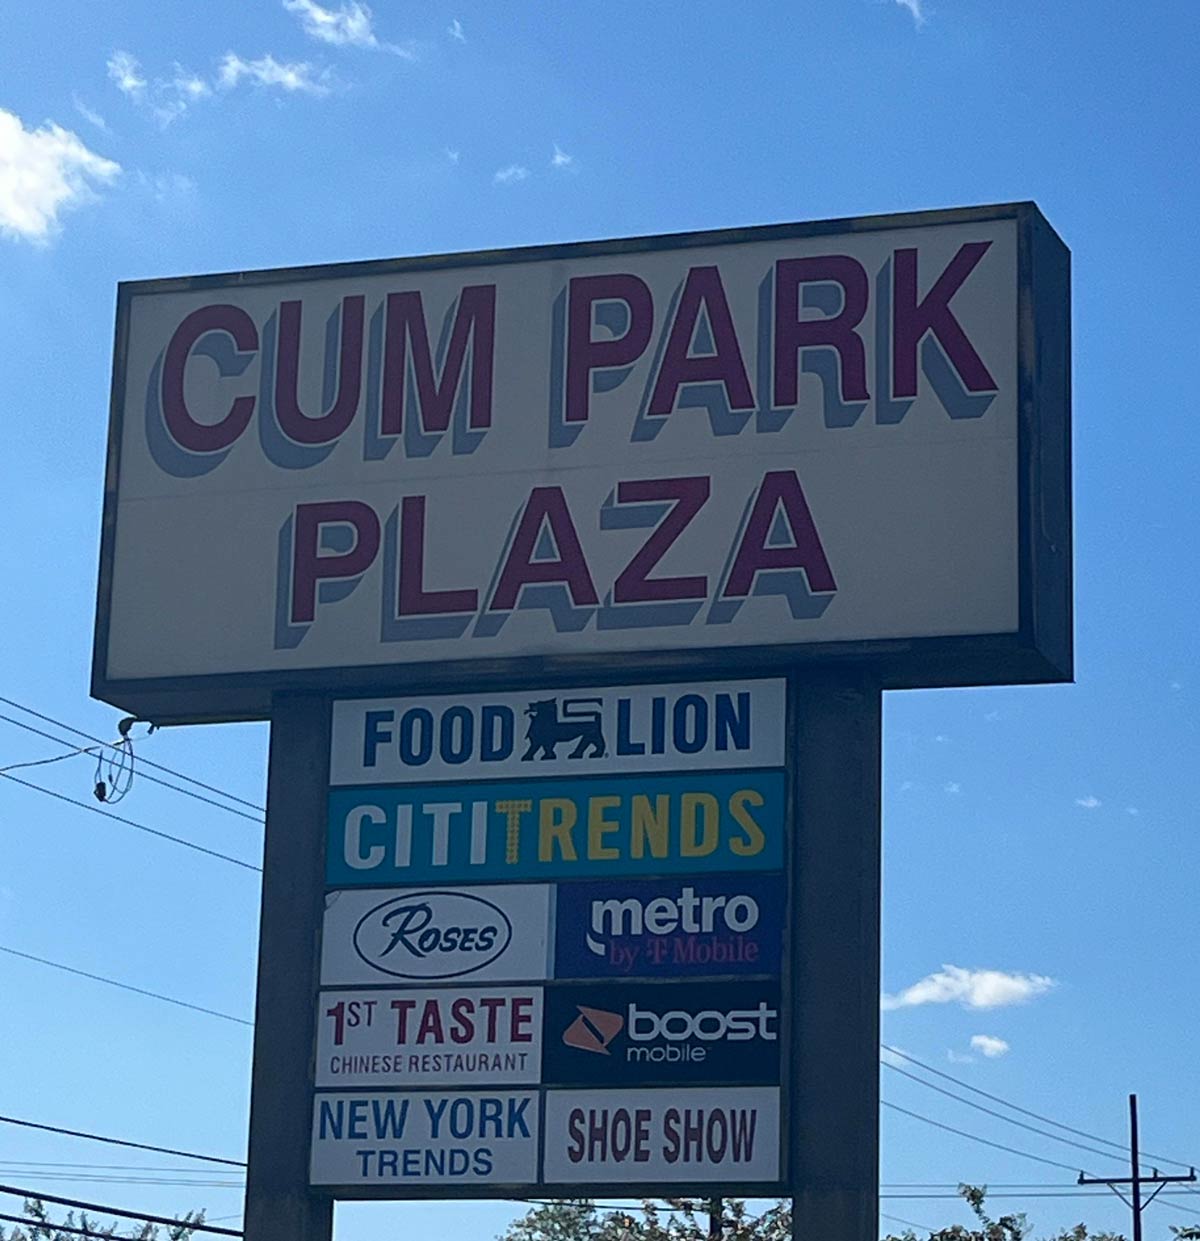 Cum Park Plaza, home of 1st Taste Chinese Restaurant